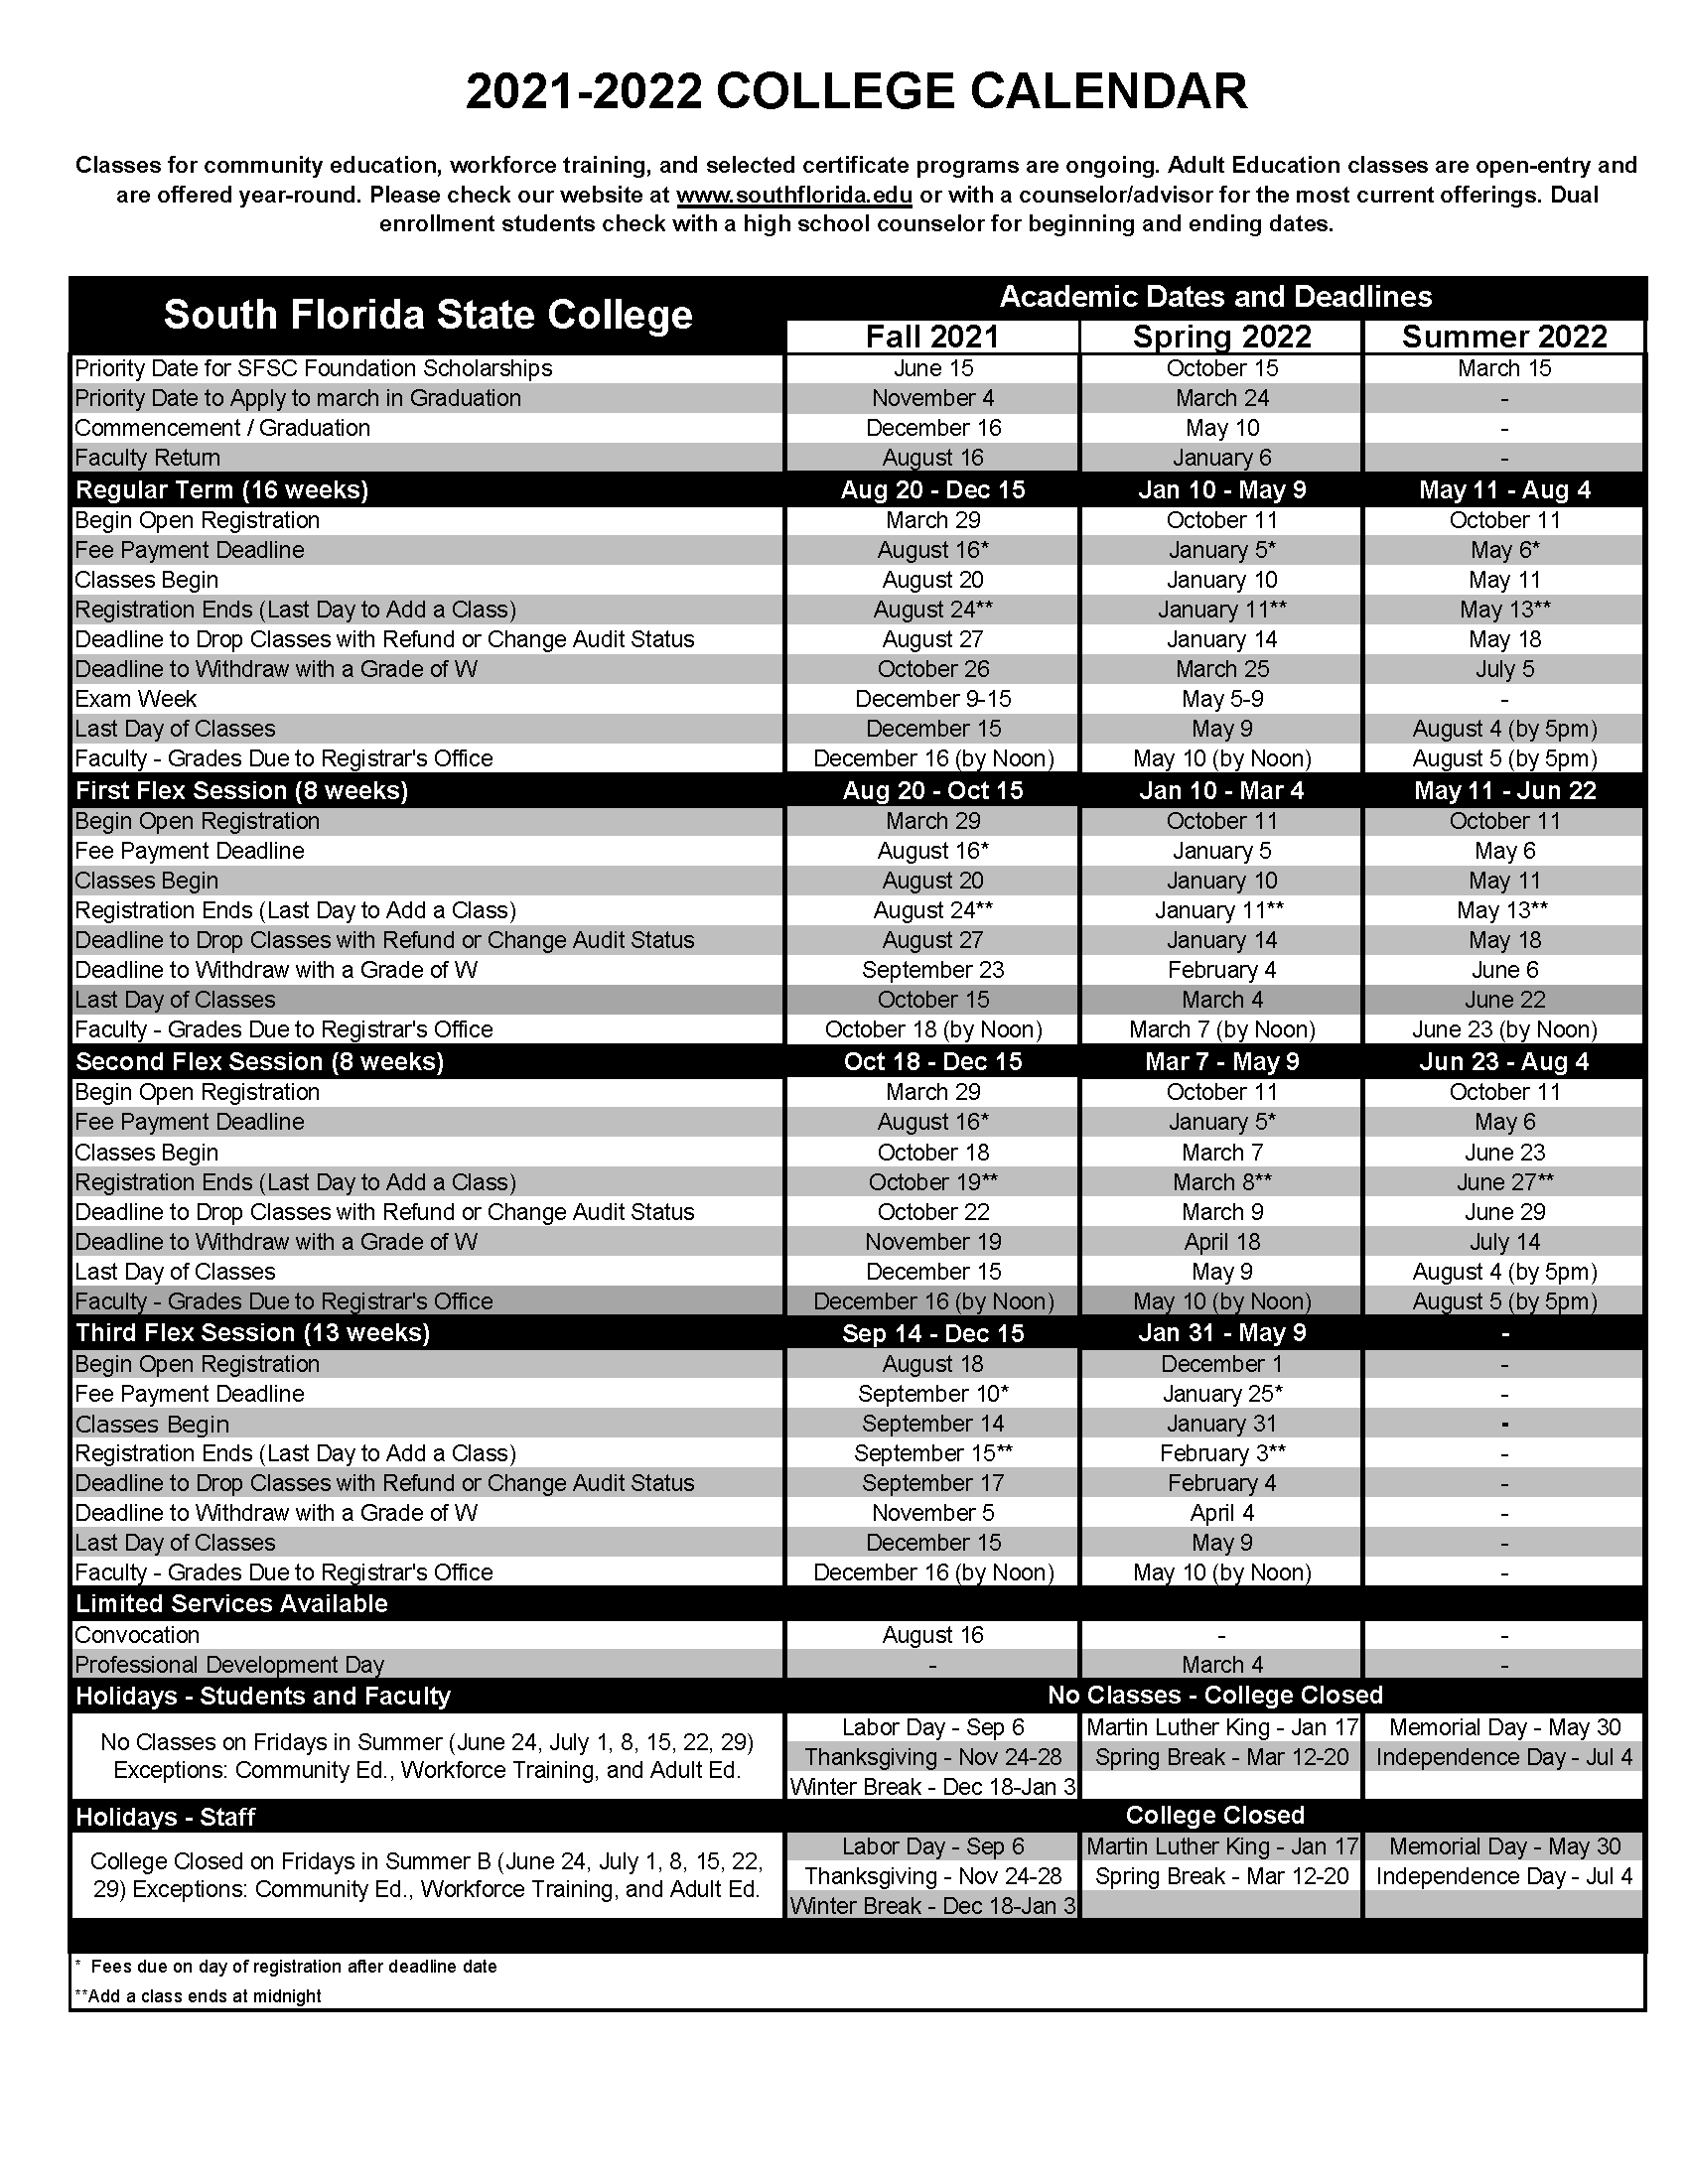 Florida Tech Academic Calendar Fall 2022 Academic Calendar 2021-2022 - College